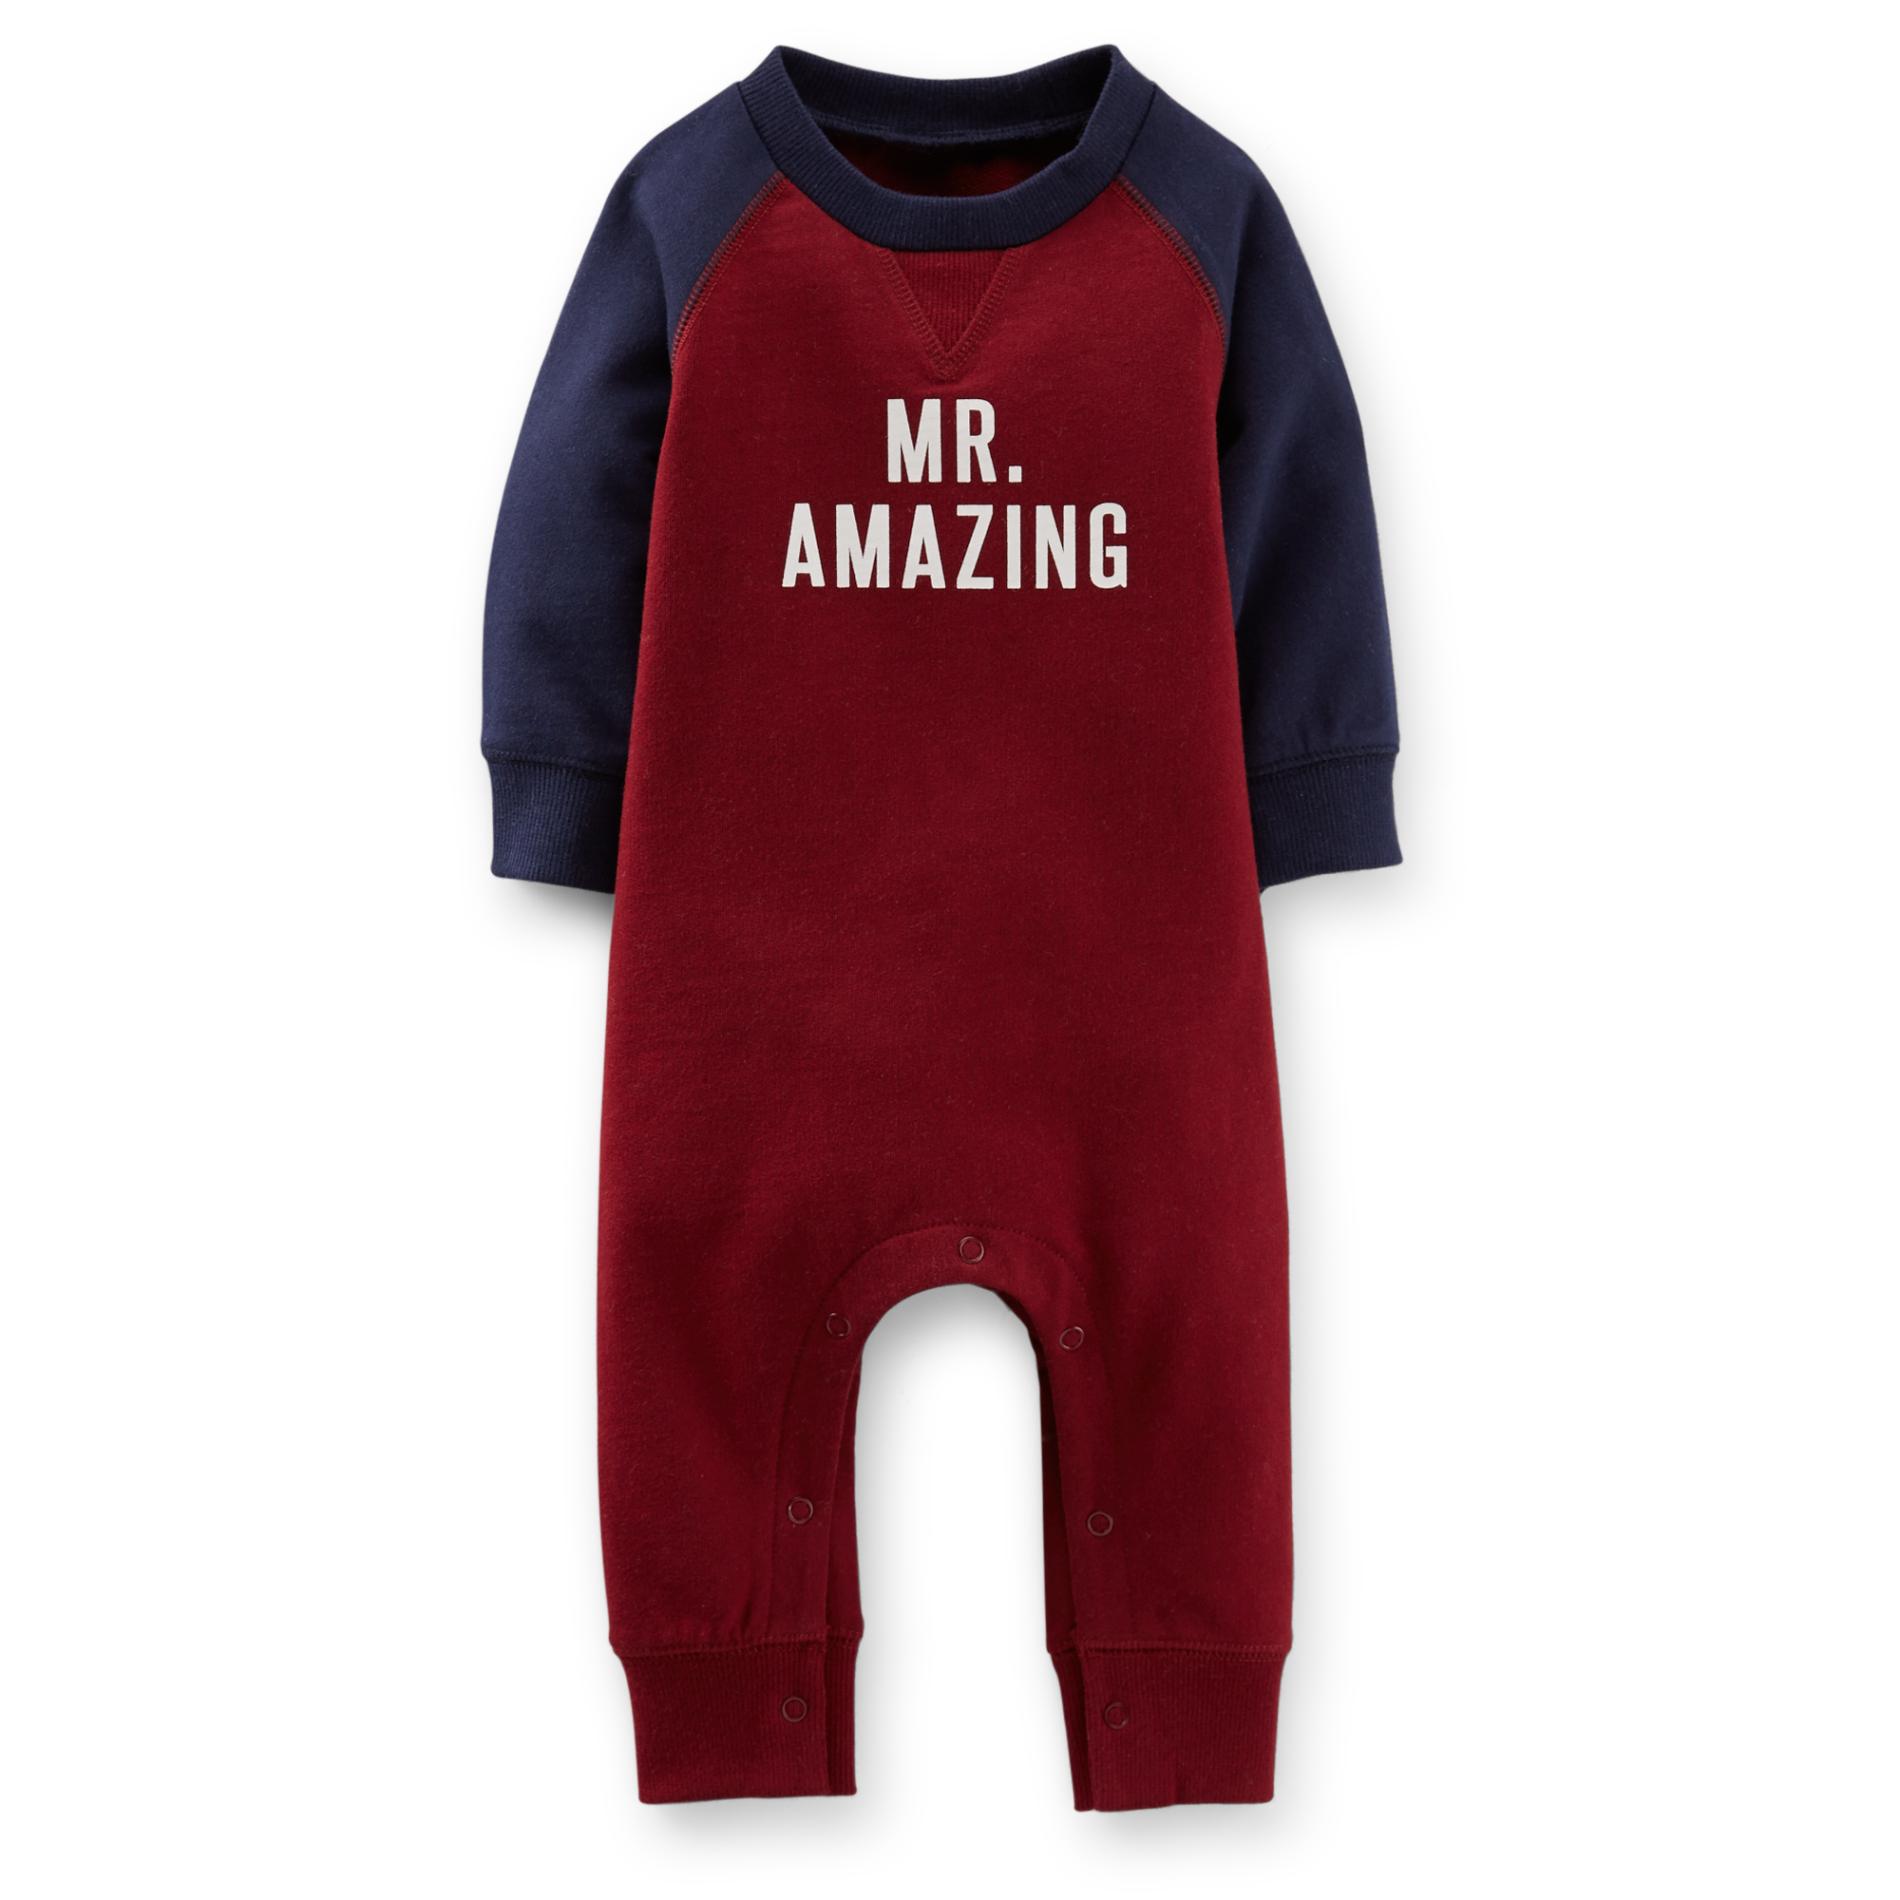 Carter's Newborn & Infant Boy's Raglan Jumpsuit - Mr. Amazing